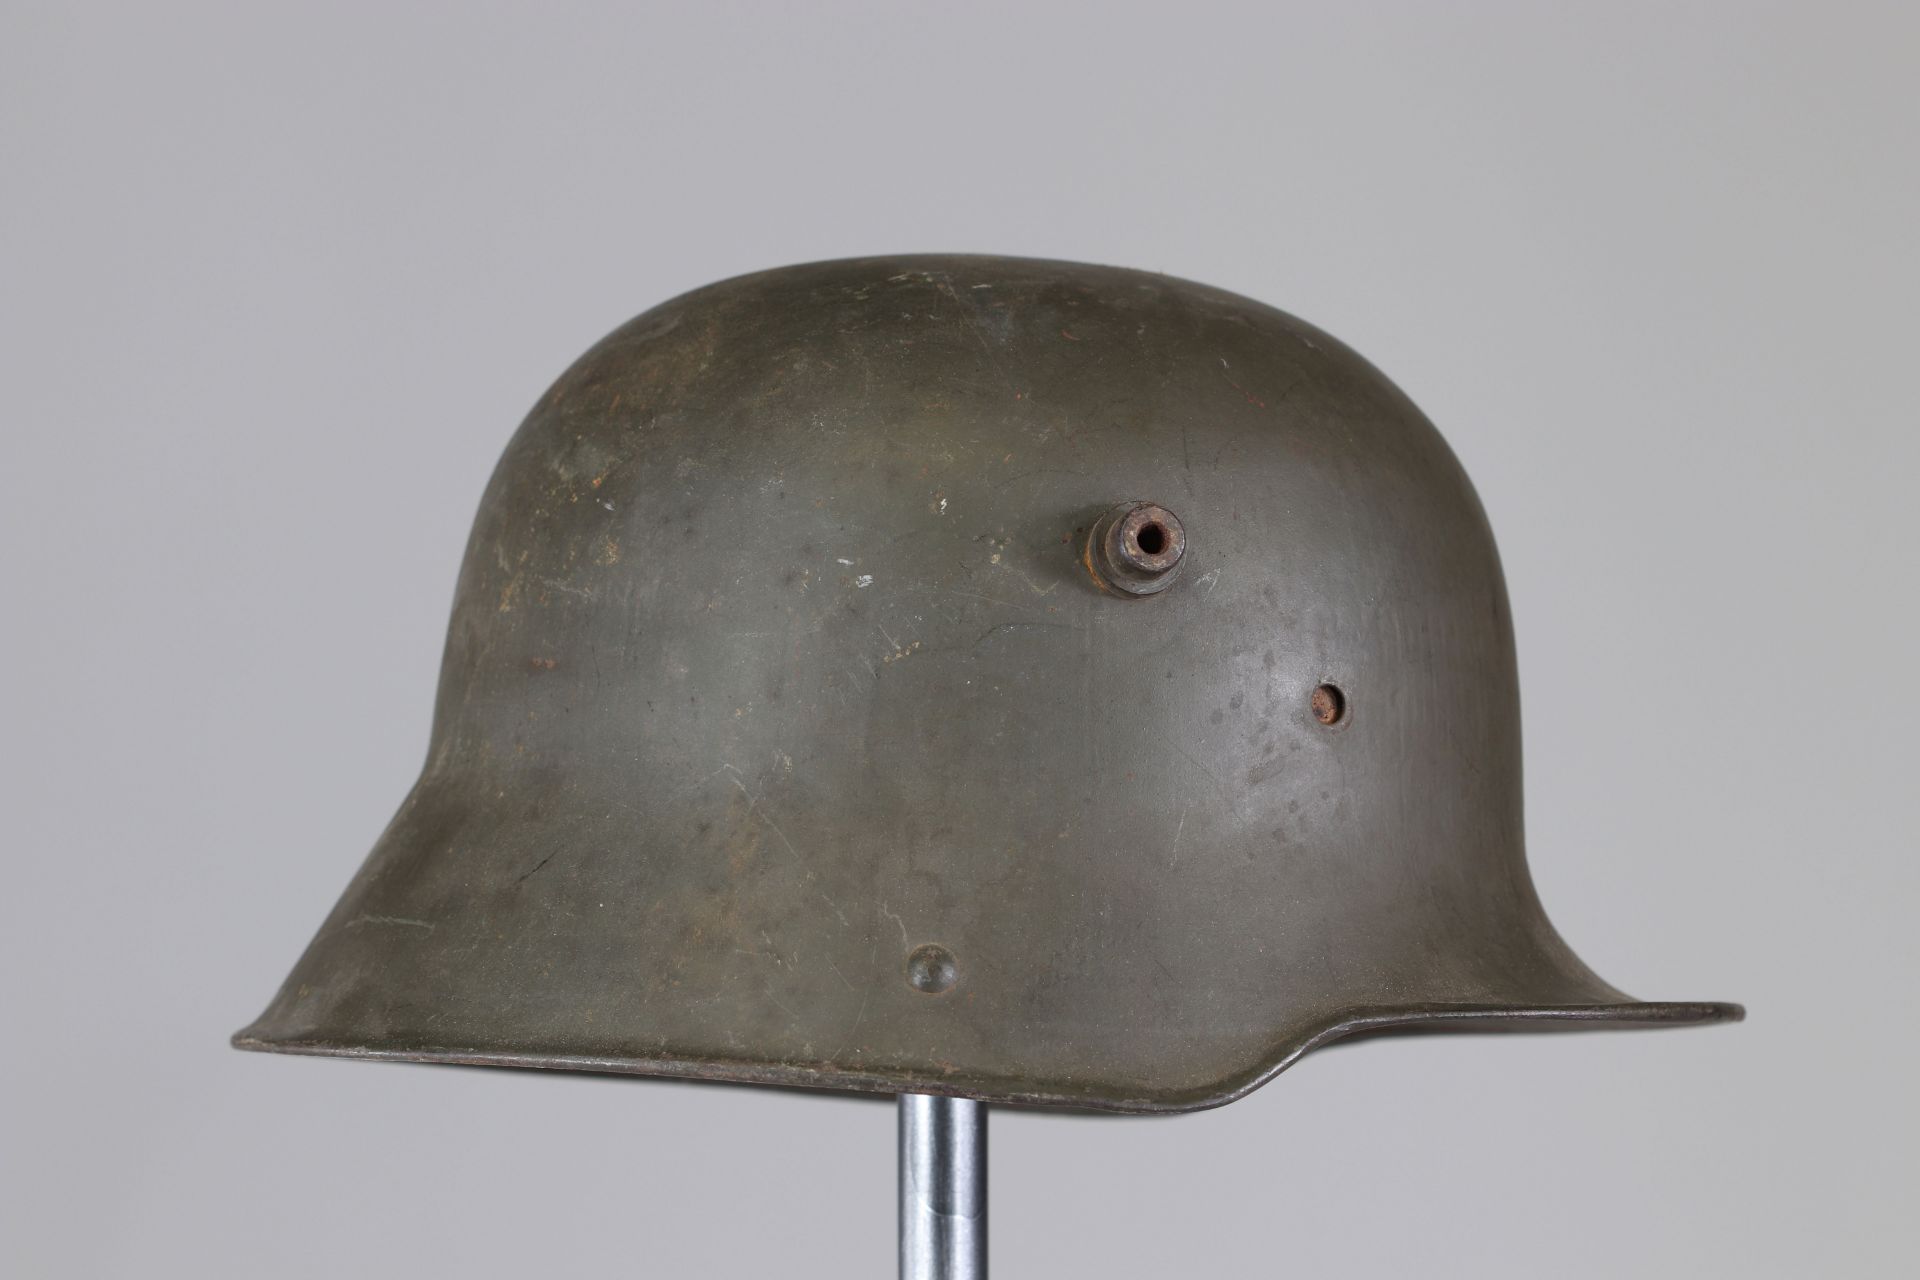 Germany ww1 helmet with Mitralleur cocorde - Image 2 of 5